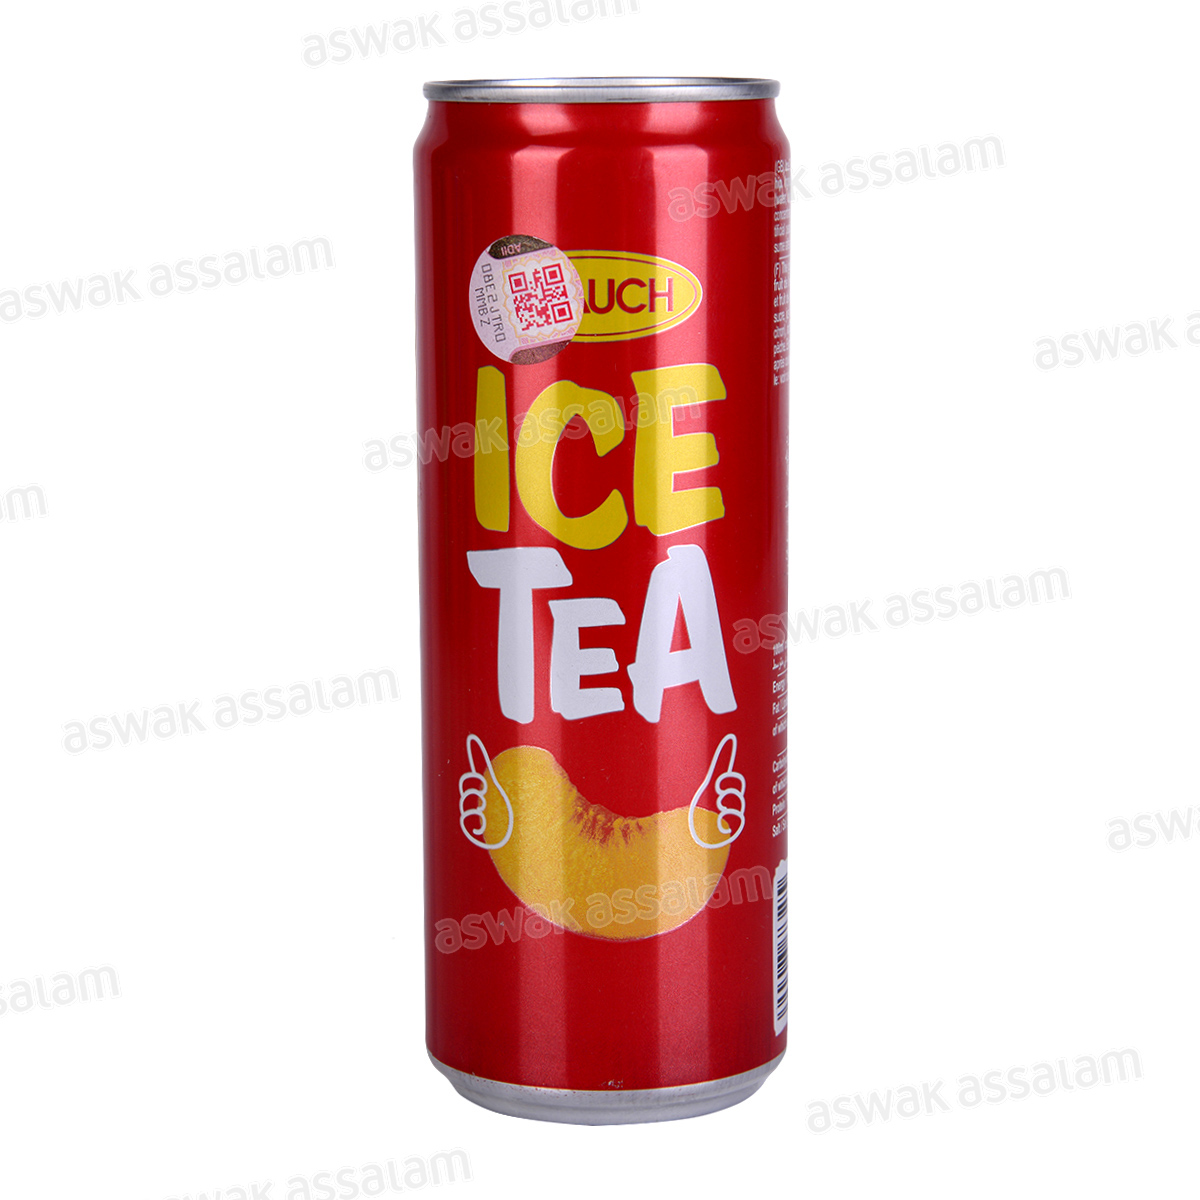 ICE TEA PECHE 33,5CL RAUCH